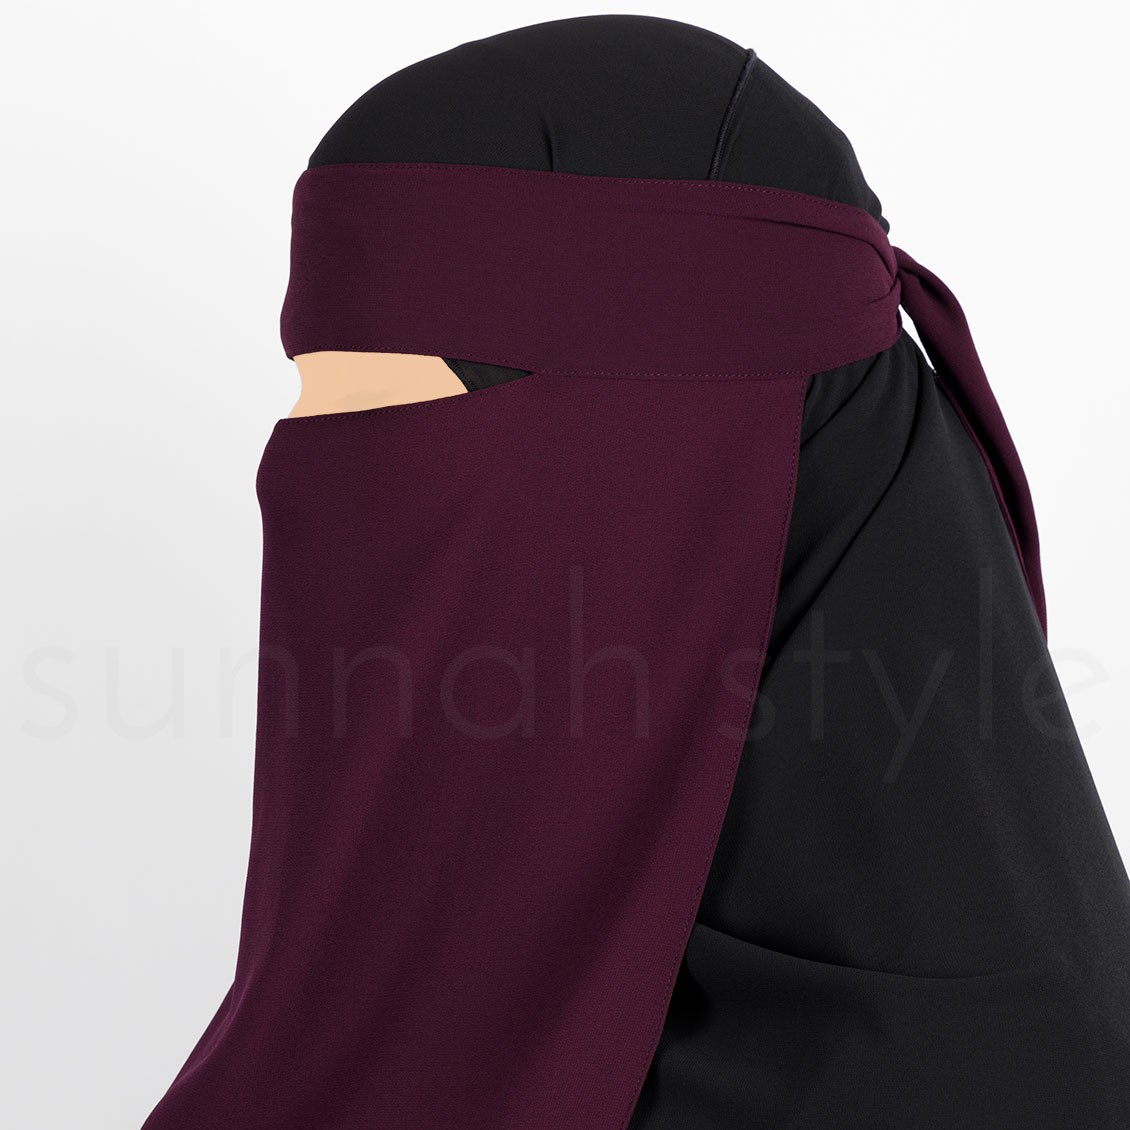 Sunnah Style Pebble One Layer Niqab Boysenberry